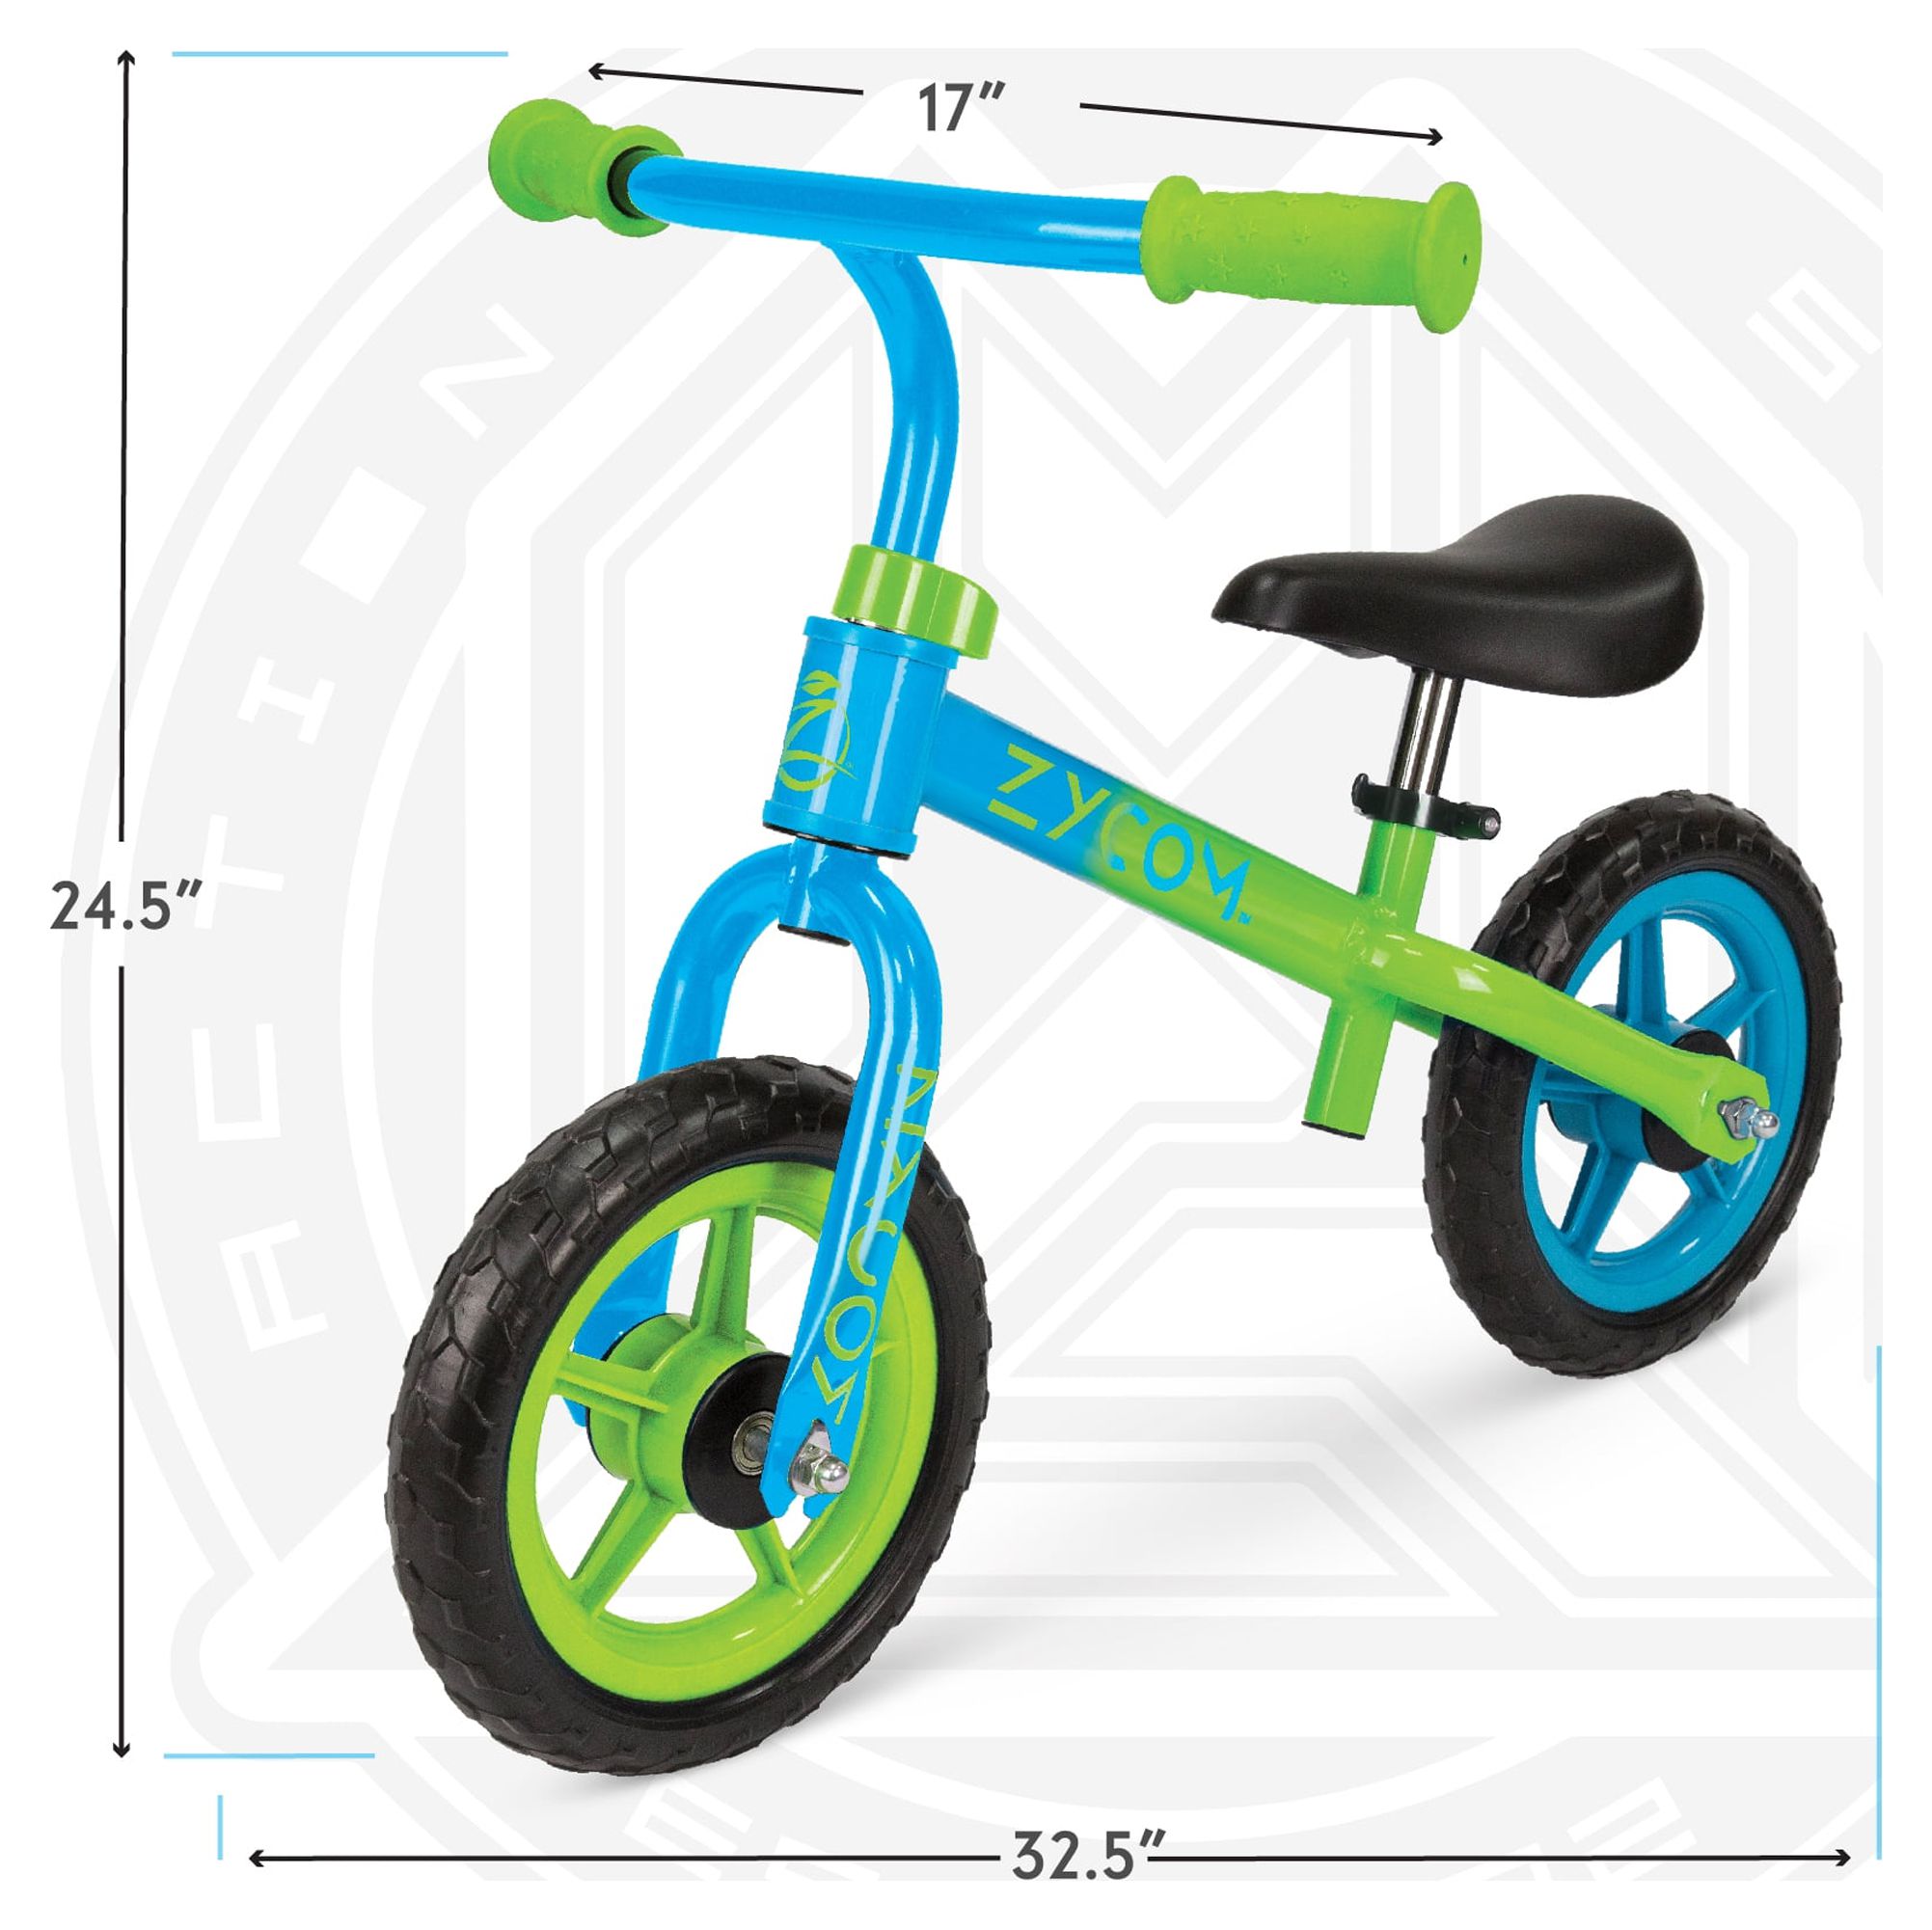 Zycom 10-inch Toddlers Balance Bike Adjustable Helmet Airless Wheels Lightweight Training Bike Blue - image 7 of 12